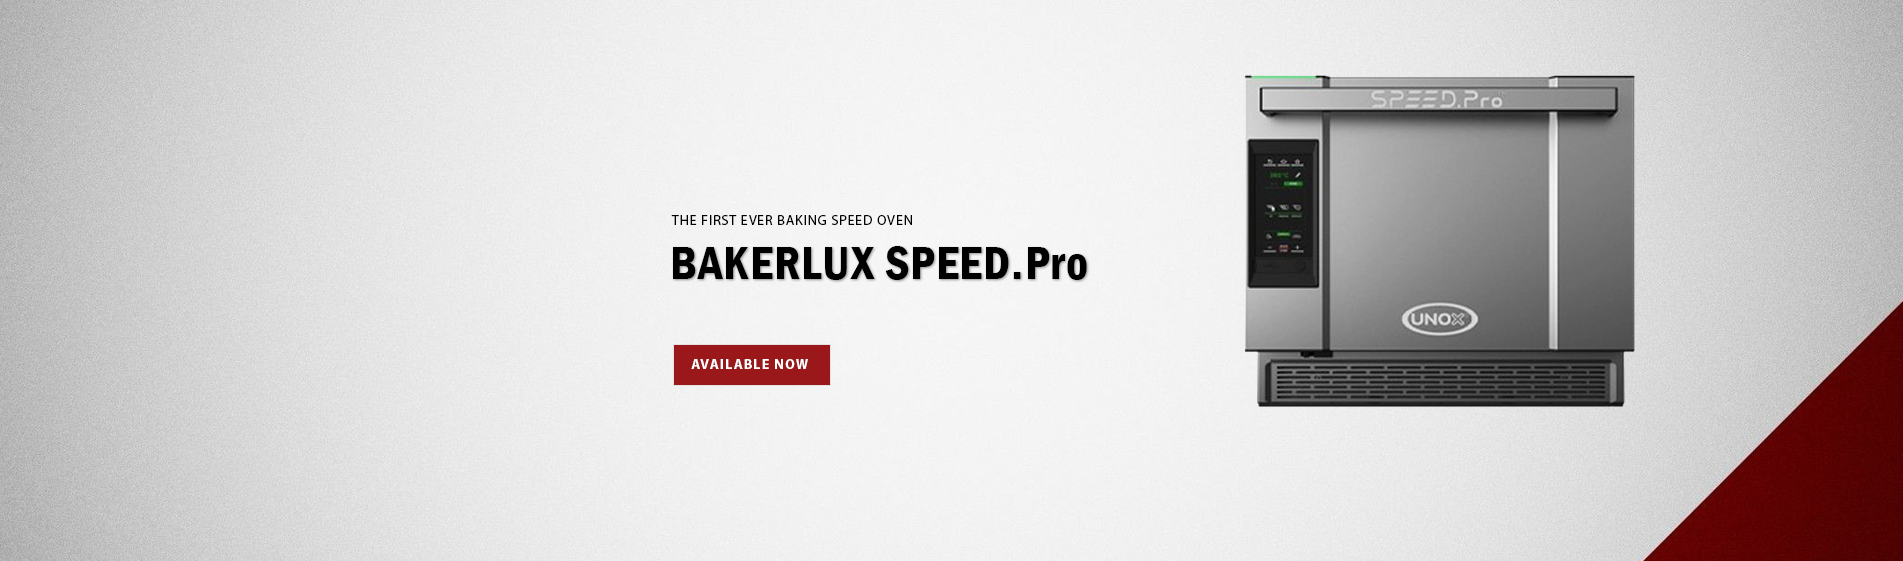 Bakerlux SPEED.Pro